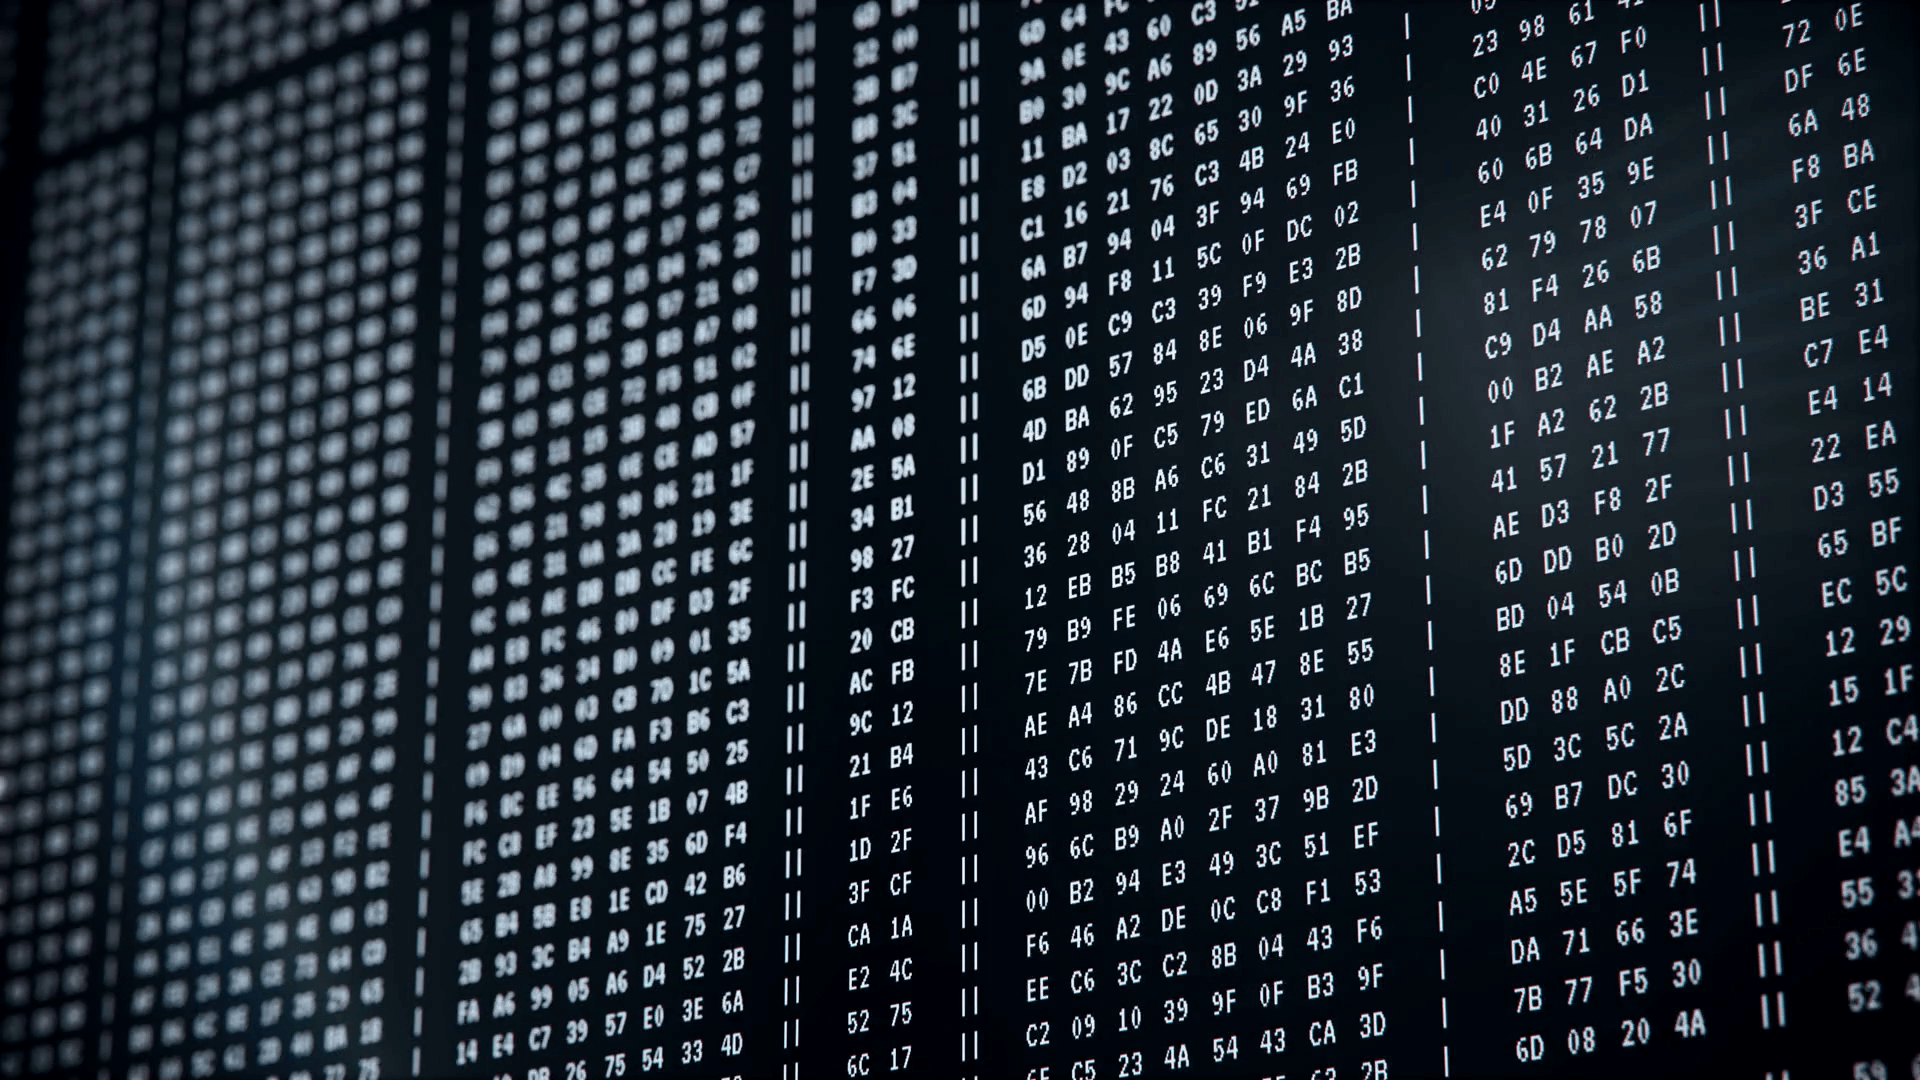 Hacking code strings running on black screen, programming